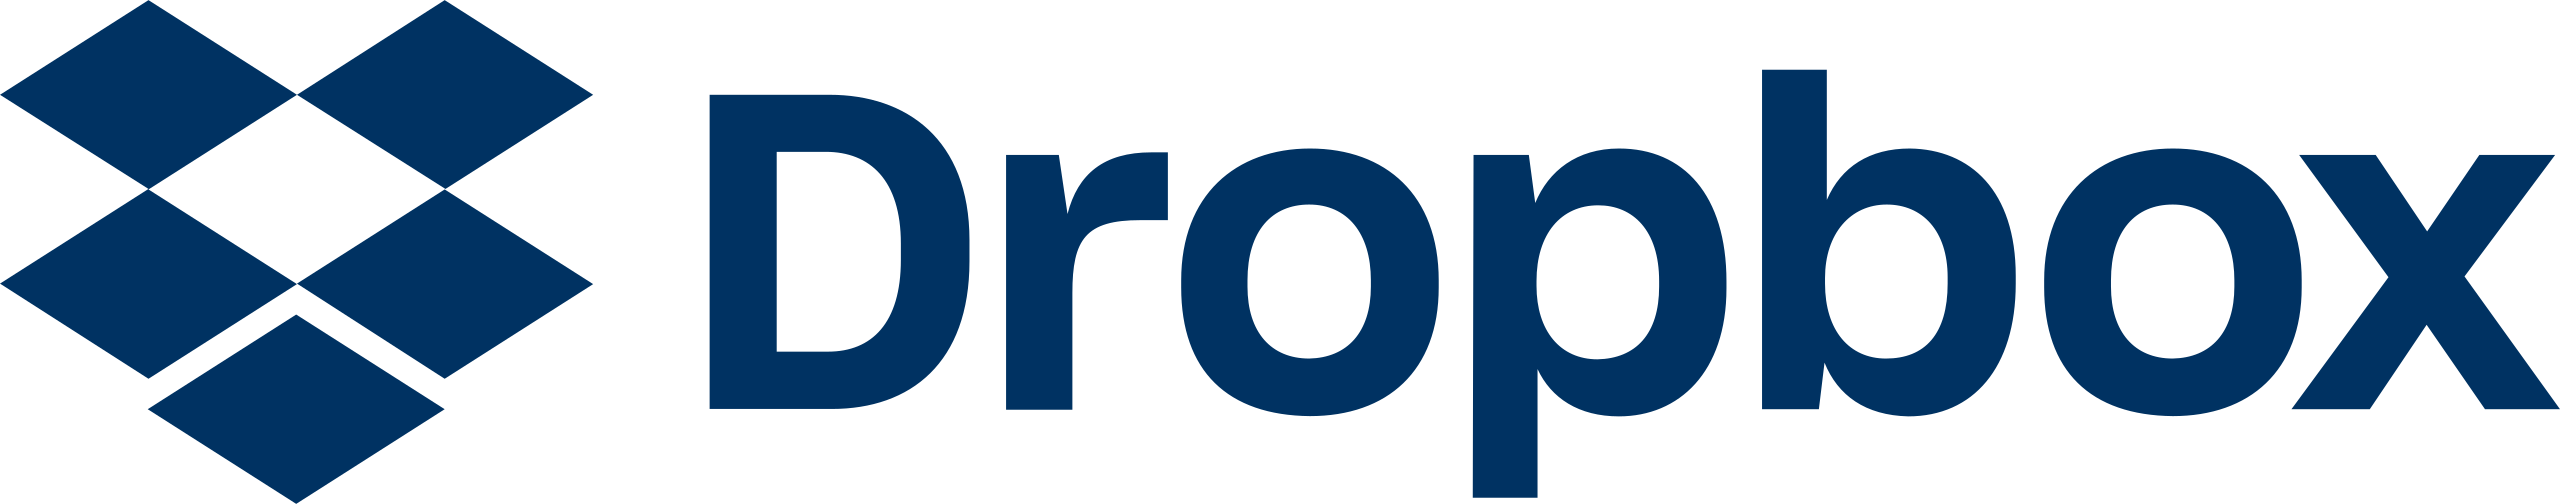 Dropbox_logo_blue